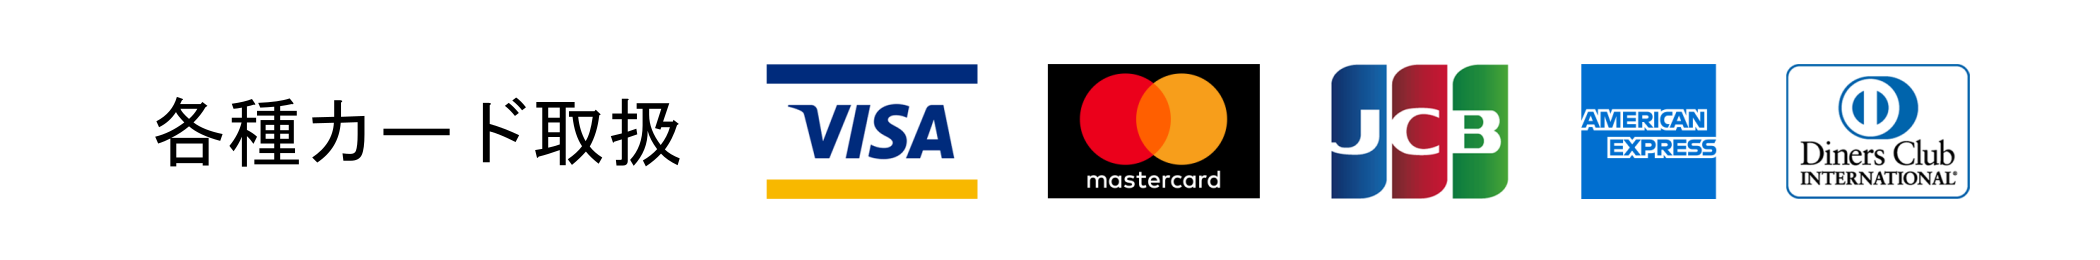 Visa/MasterCard/JCB/American Express/Diners Club